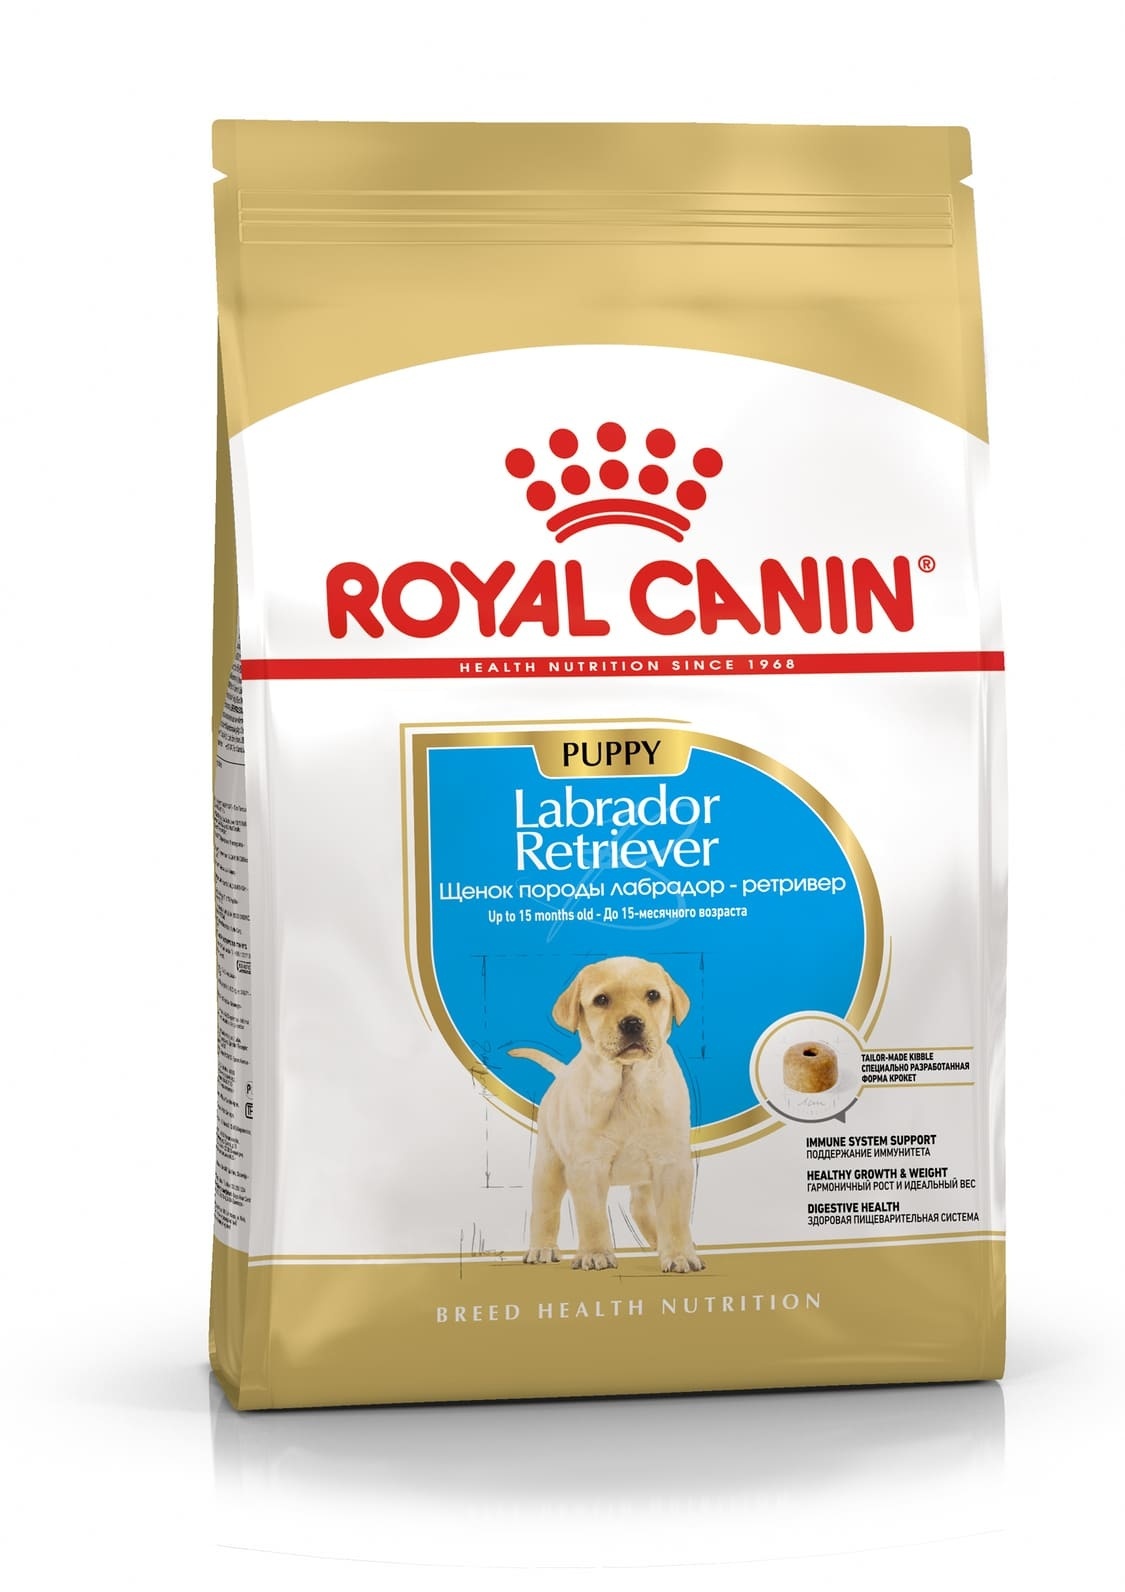 Royal Canin Royal Canin корм для щенков лабрадора до 15 месяцев (12 кг) корм для щенков royal canin labrador retriever puppy для породы лабрадор до 15 месяцев сух 12кг